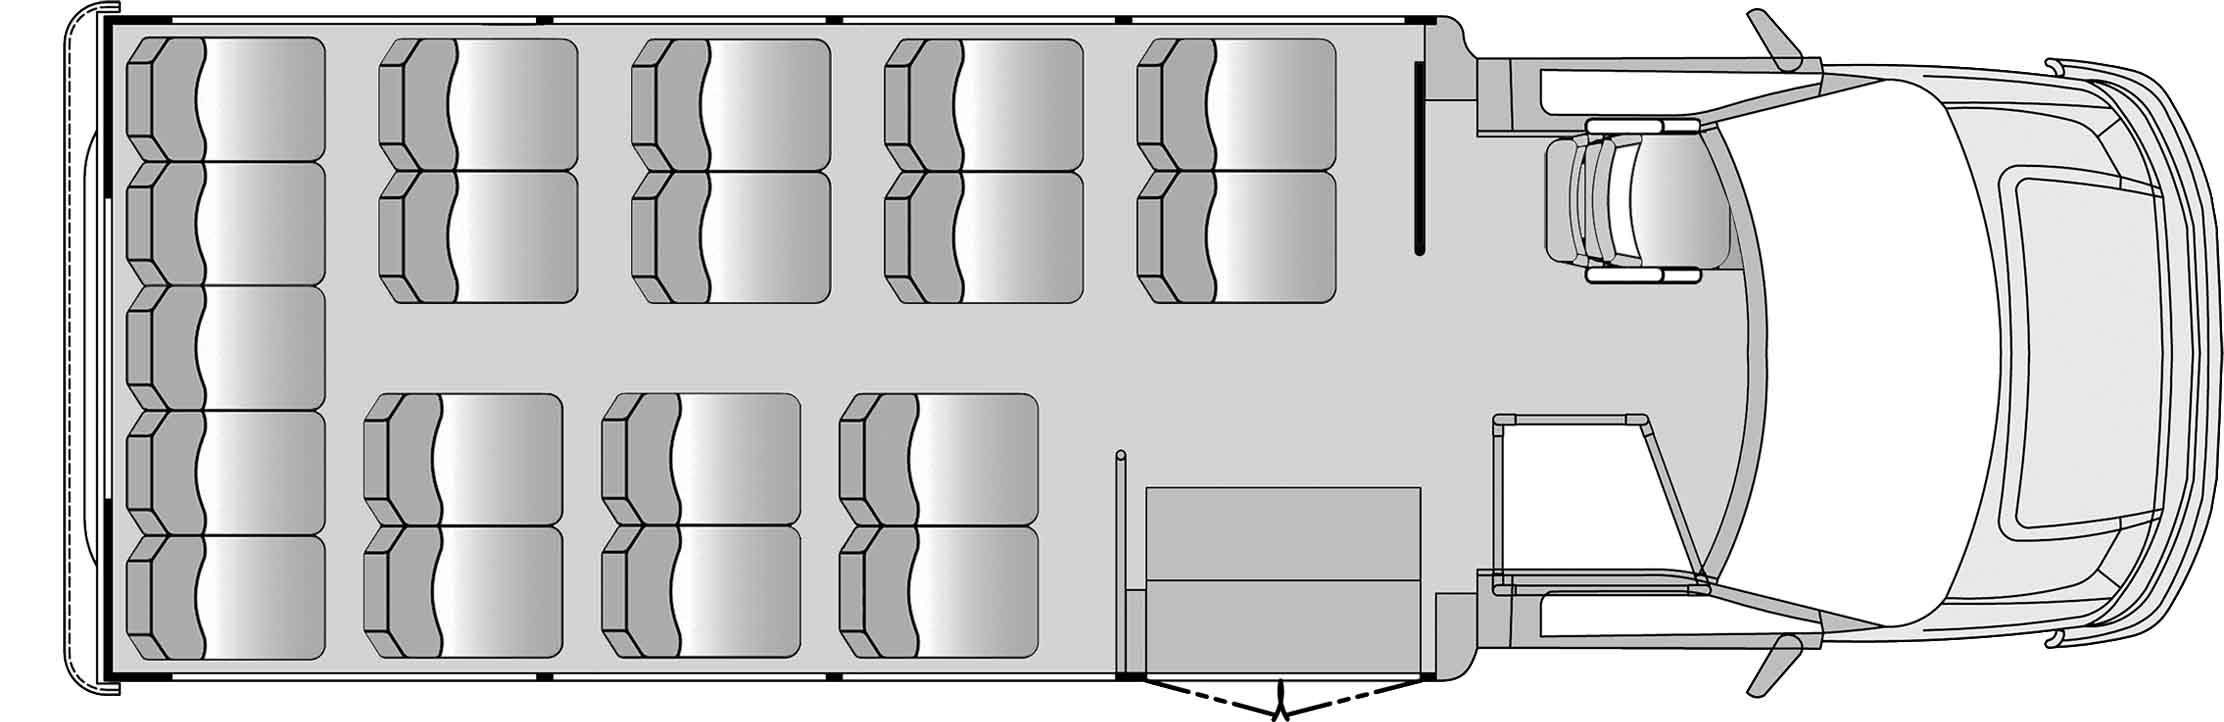 19 PASSENGER And Briefcase Rack PLUS DRIVER Floorplan Image